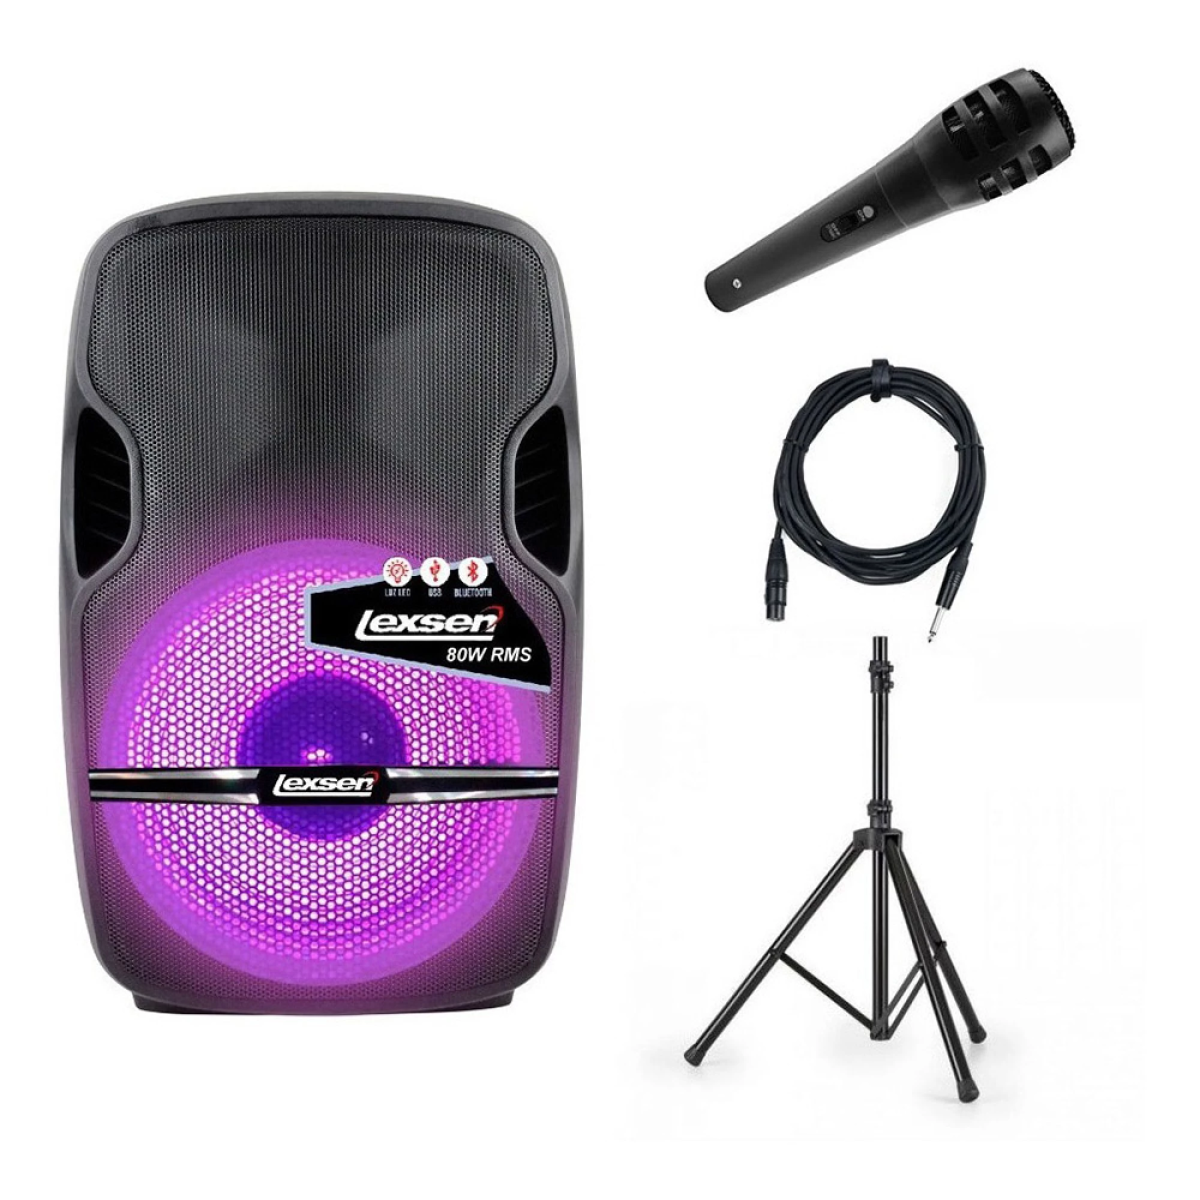 Kit de Caja Acústica Lexsen Tiny 80W Bluetooth RGB + Micrófono + Soporte - Negro 